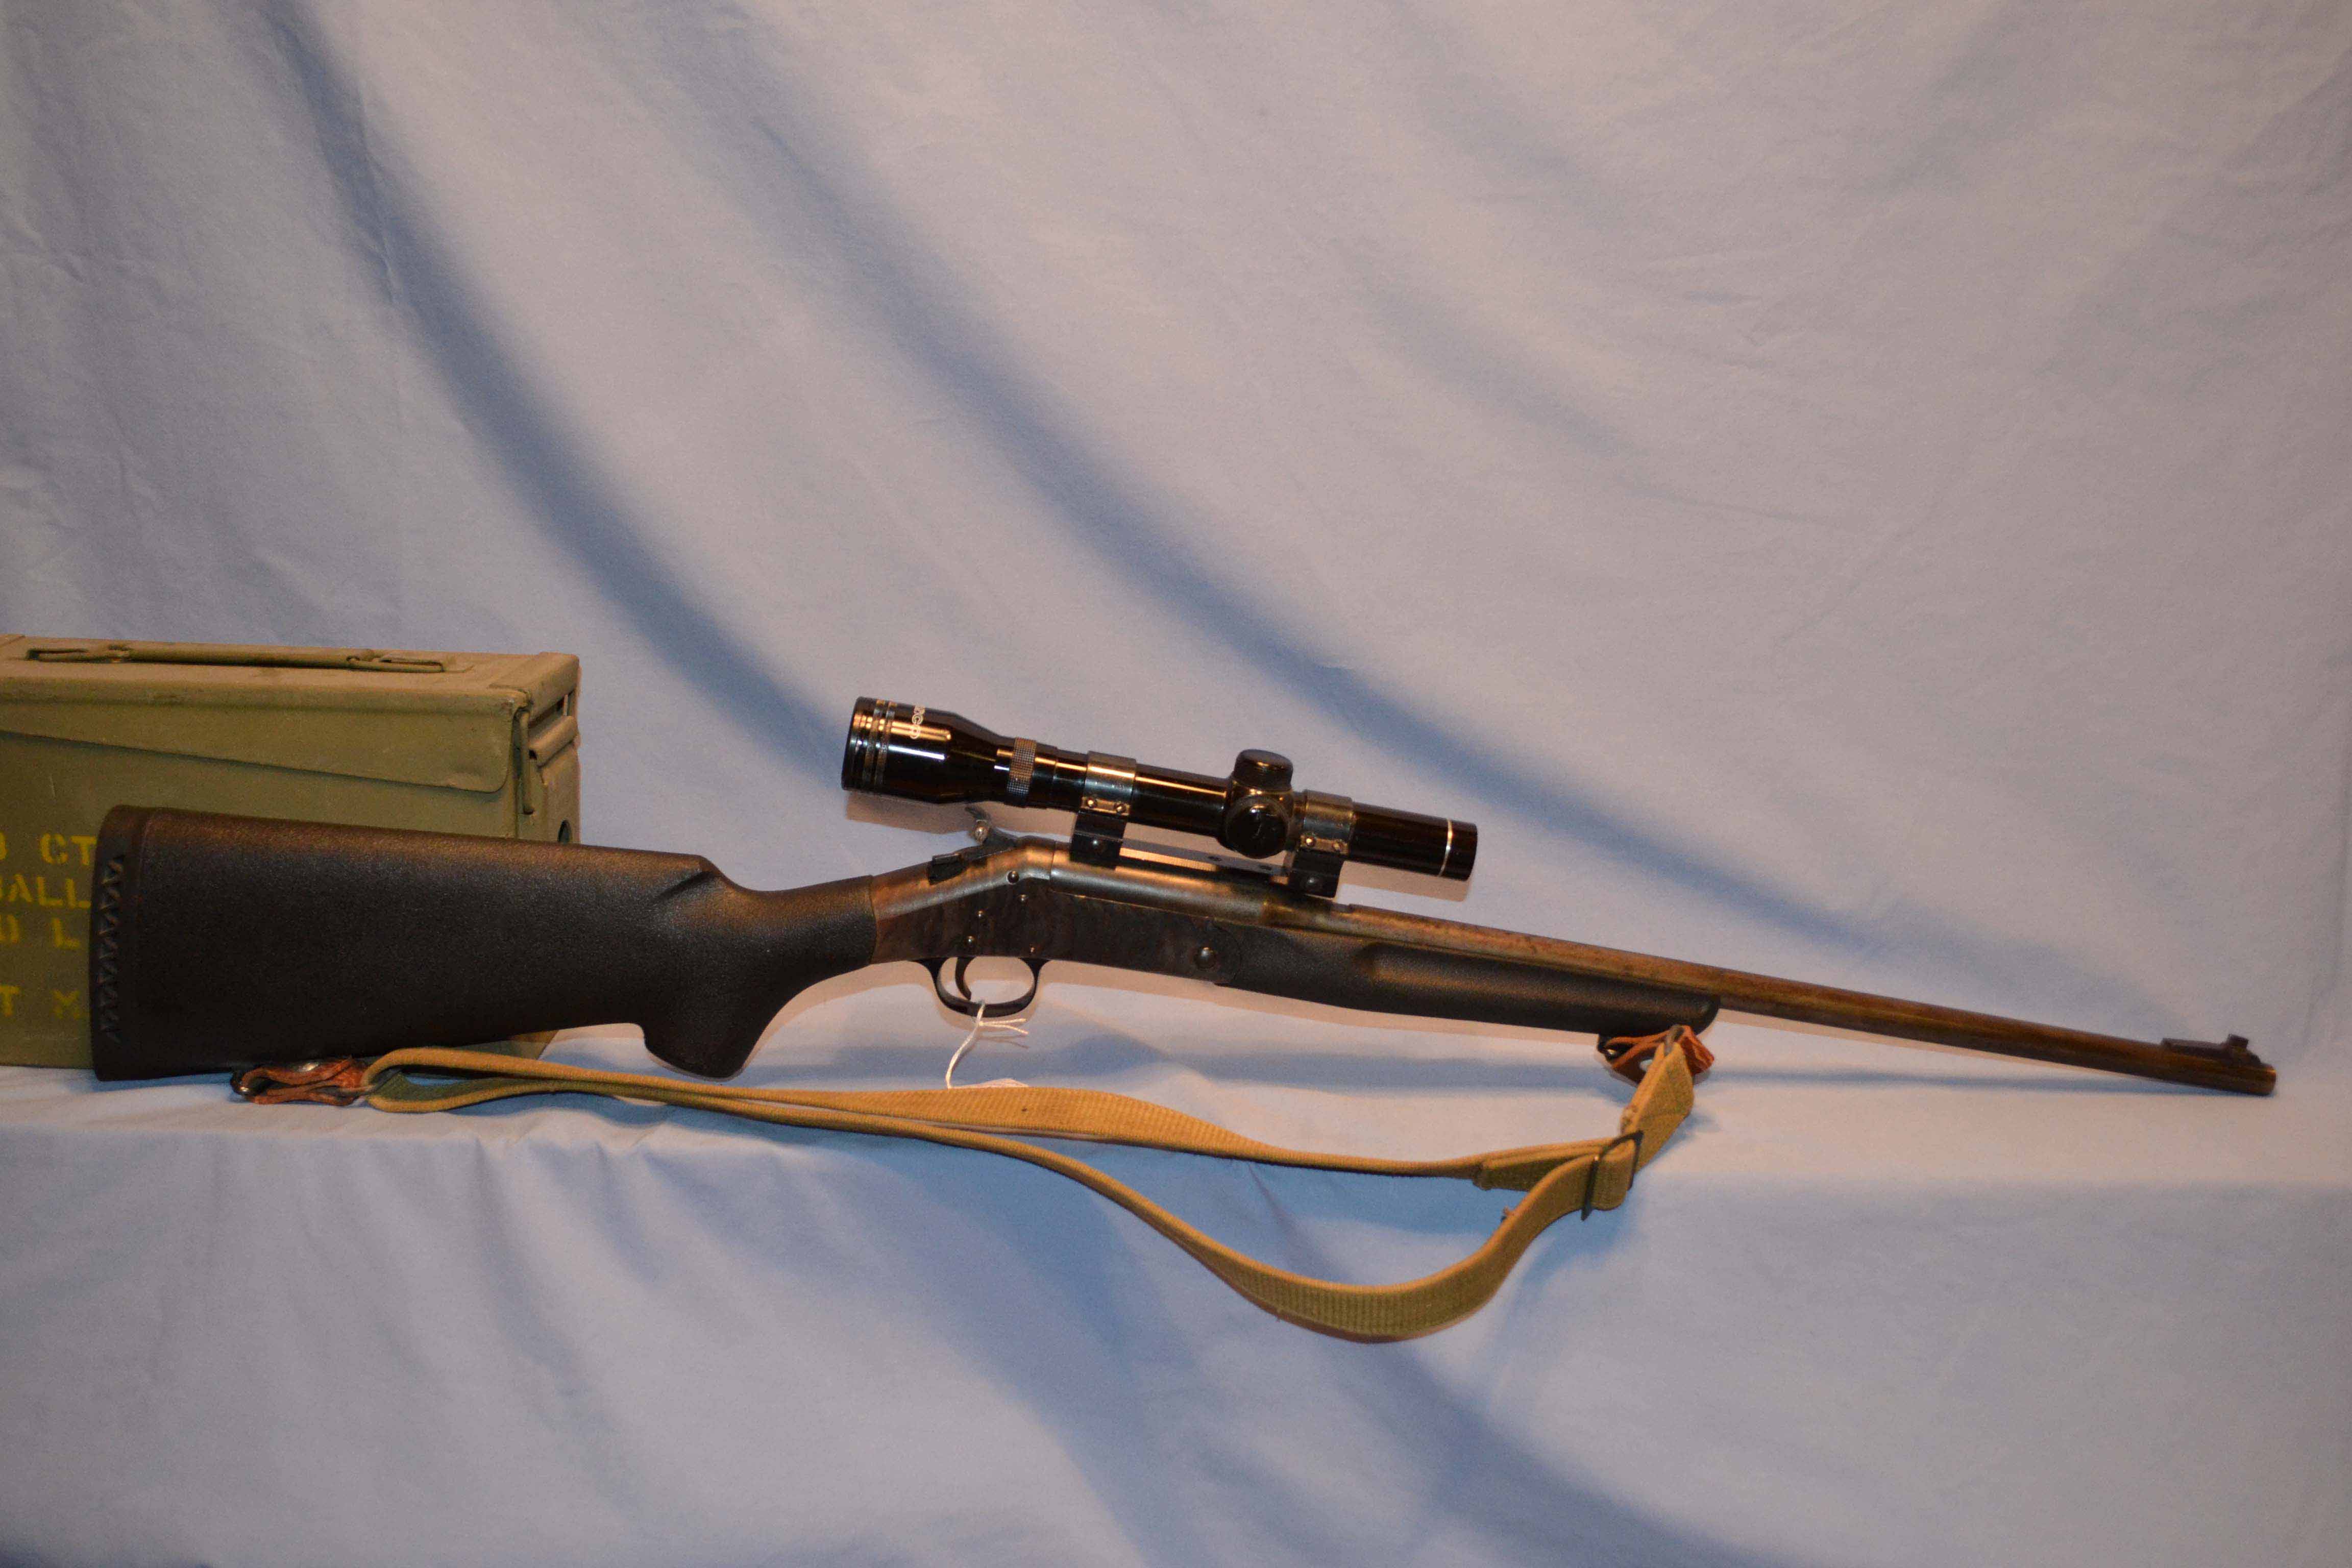 H&R Handi-Rifle 22 hornet with scope